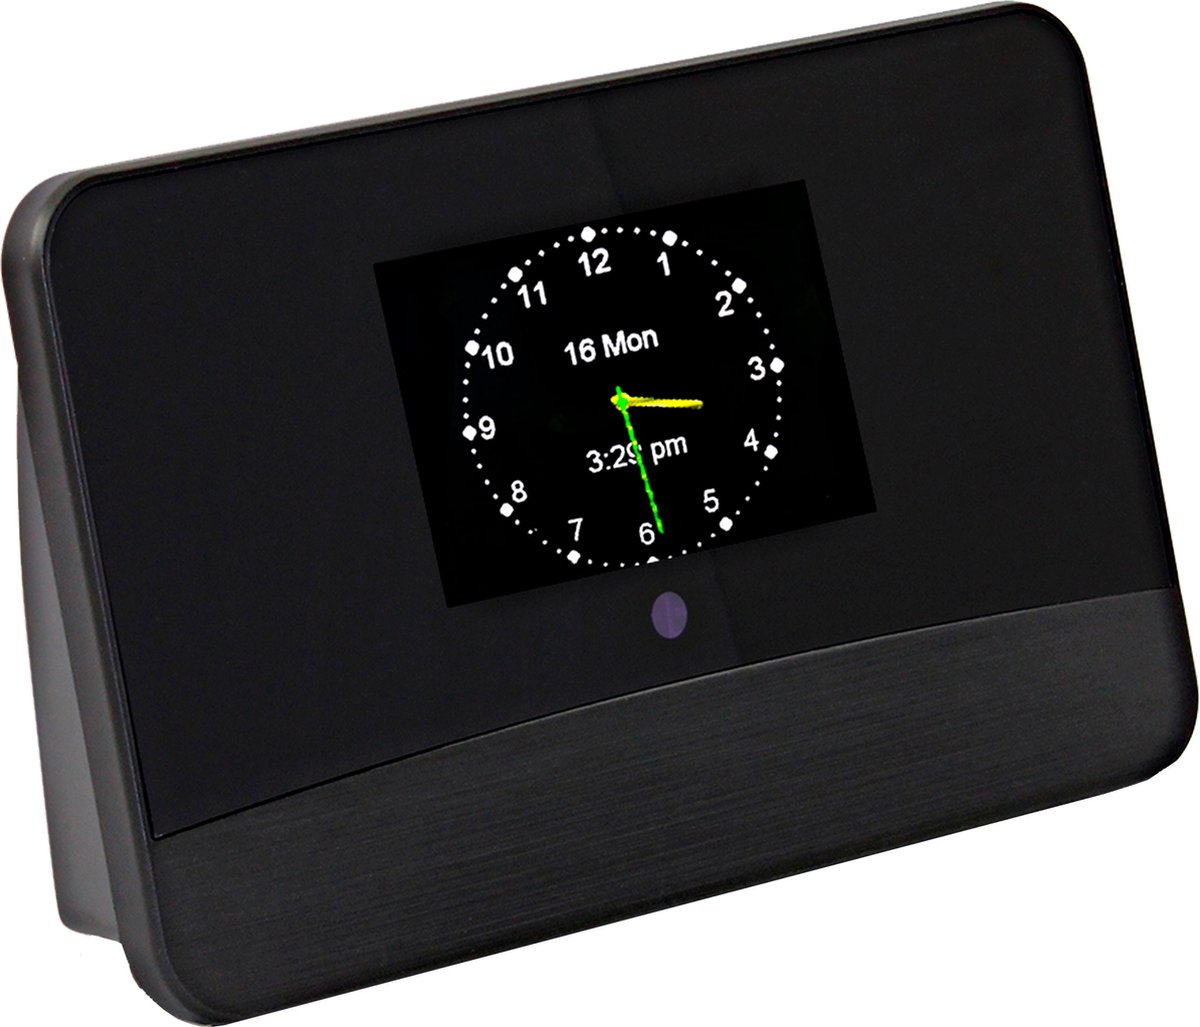 Denver Internet Radio Adapter - Bluetooth - WiFi - Wekkerradio - Dubbel Alarm - IDA430 - Zwart